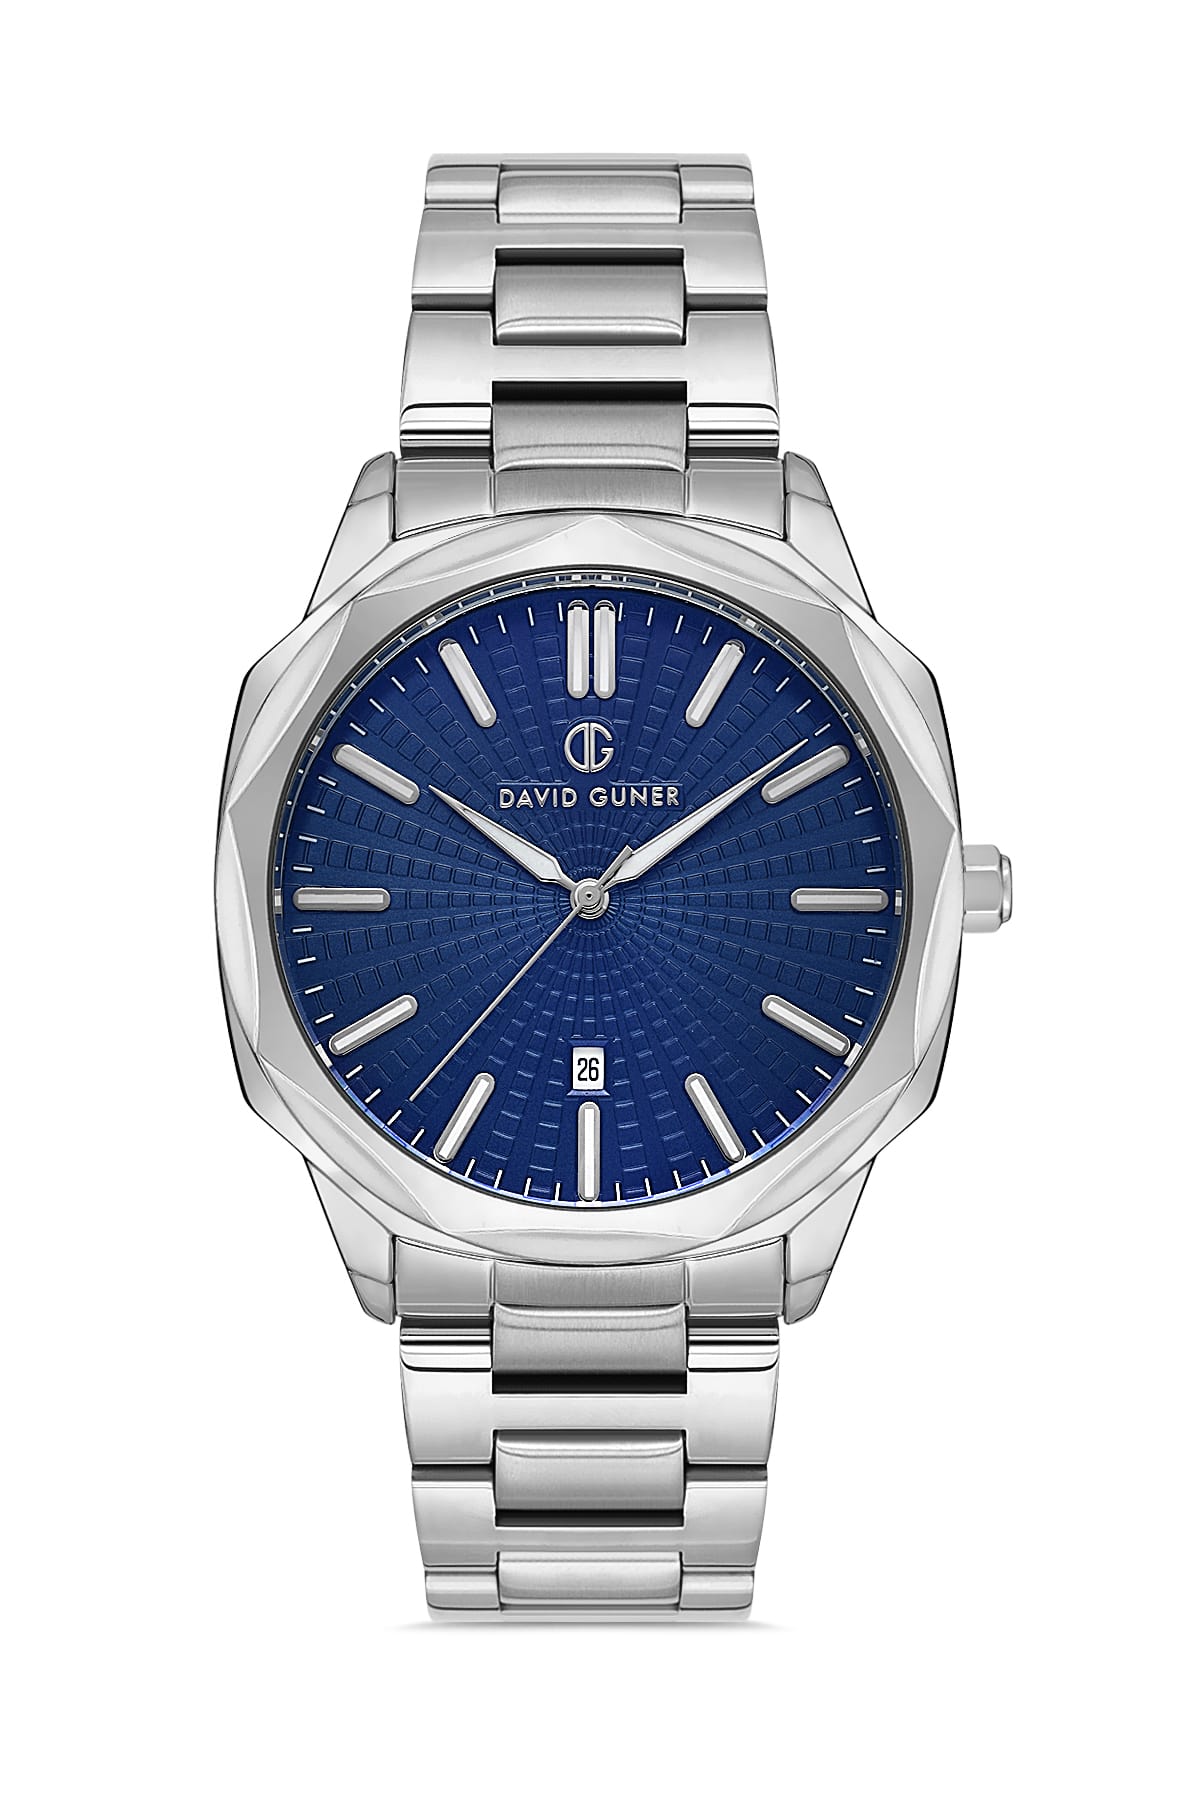 David Guner Silver Plated Men's Wristwatch